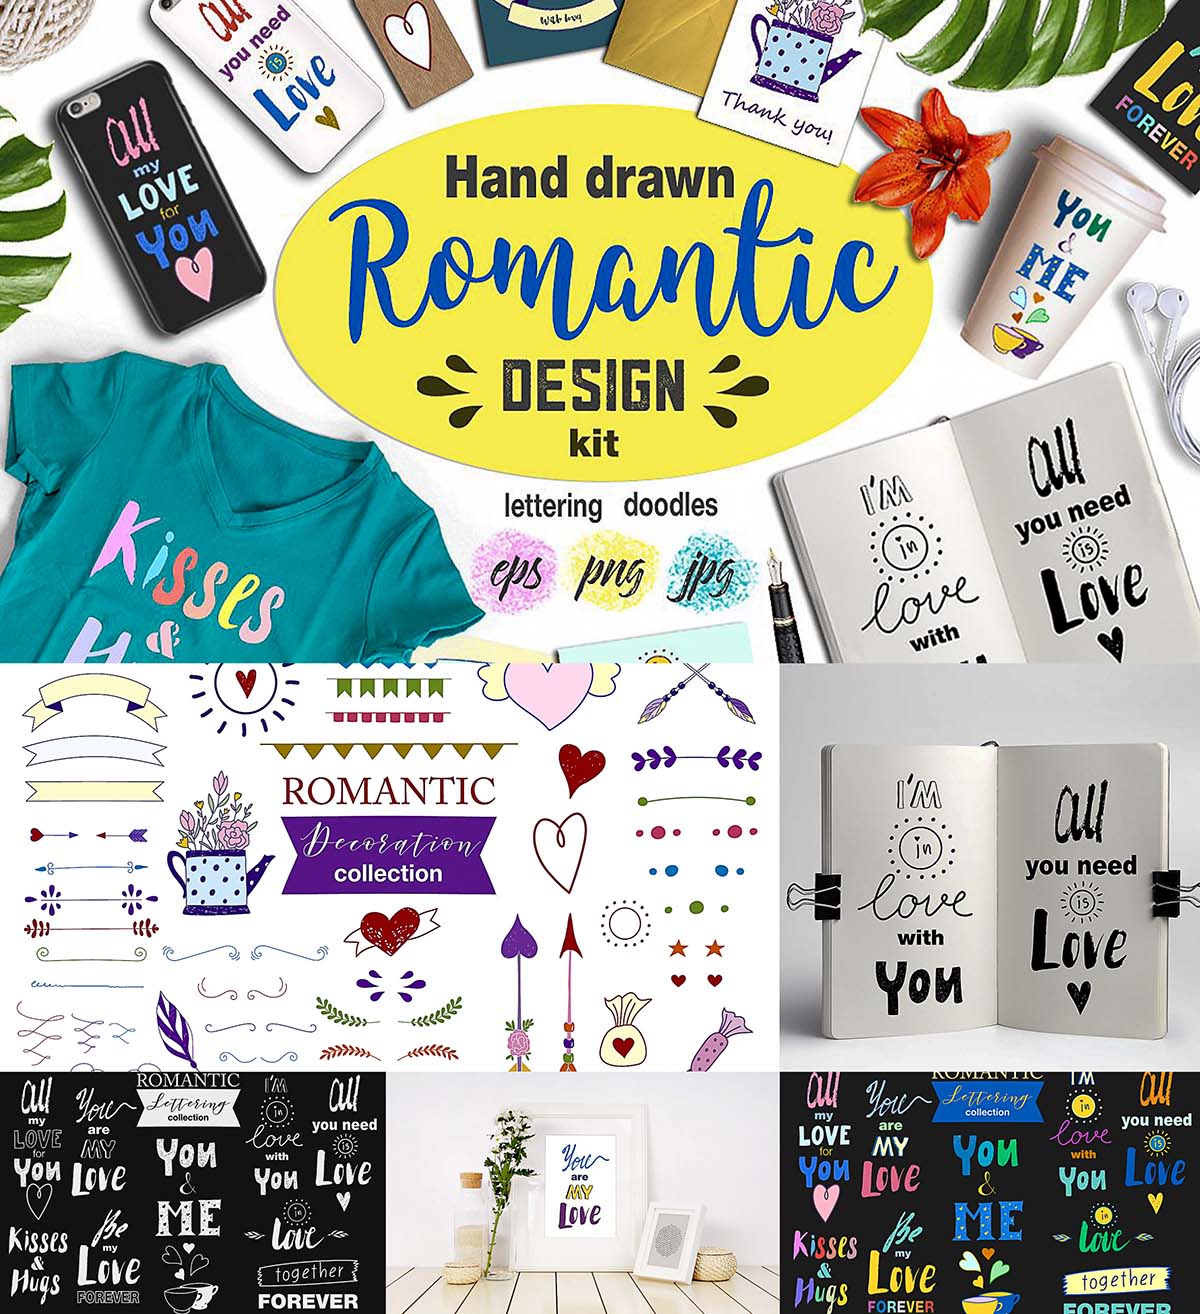 Romantic designers kit